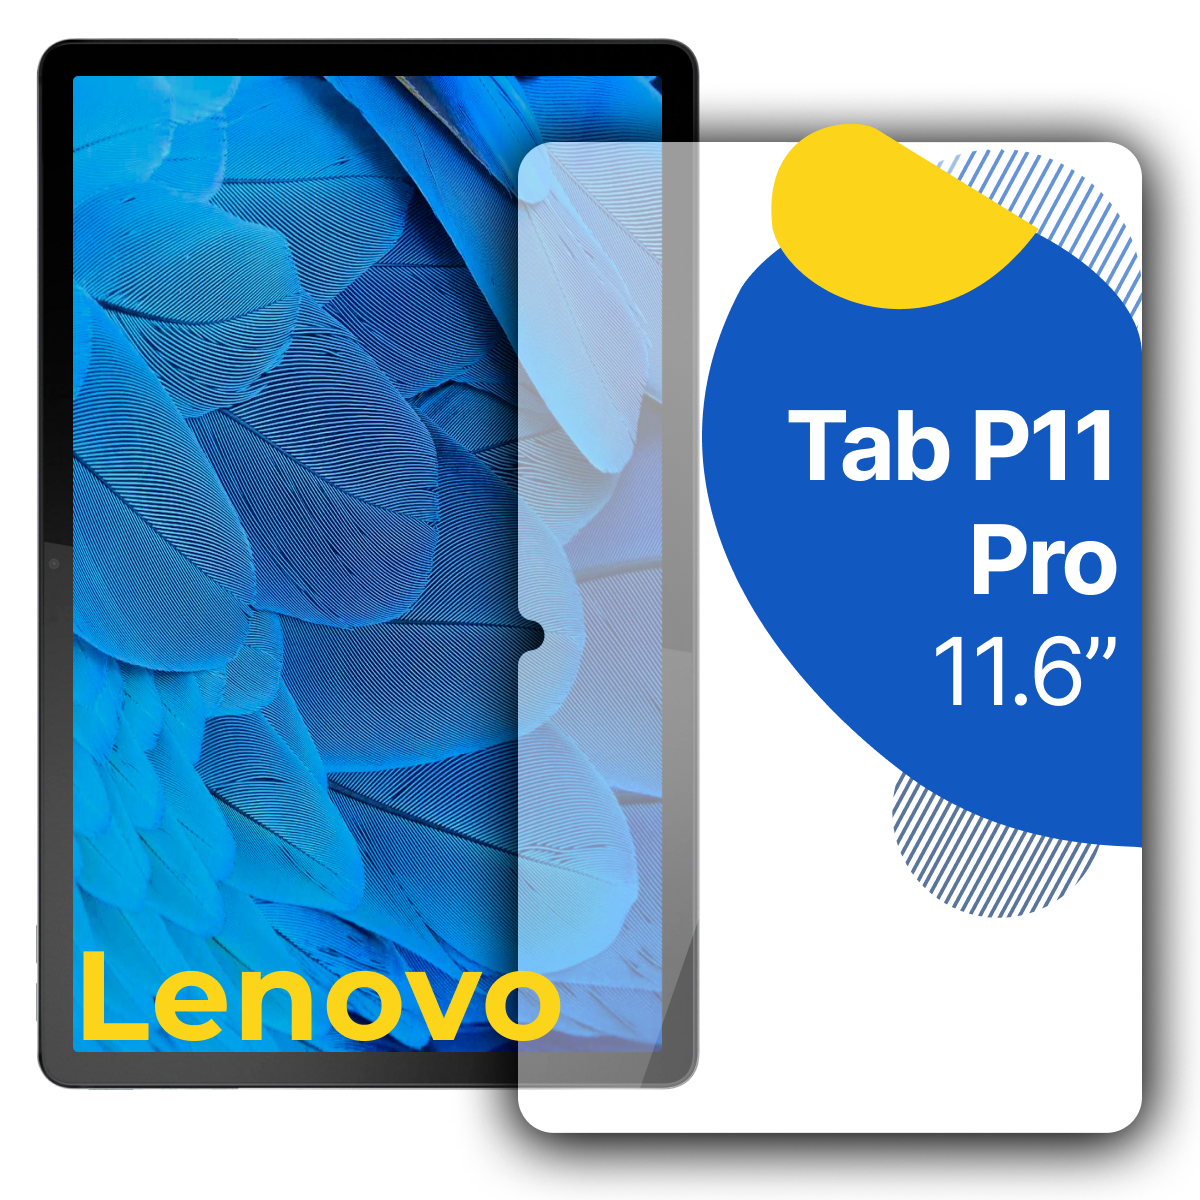 Защитное полноэкранное стекло на планшет Lenovo Tab P11 Pro 11.6" / Противоударное прозрачное стекло для планшета Леново Таб Р11 Про 11.6